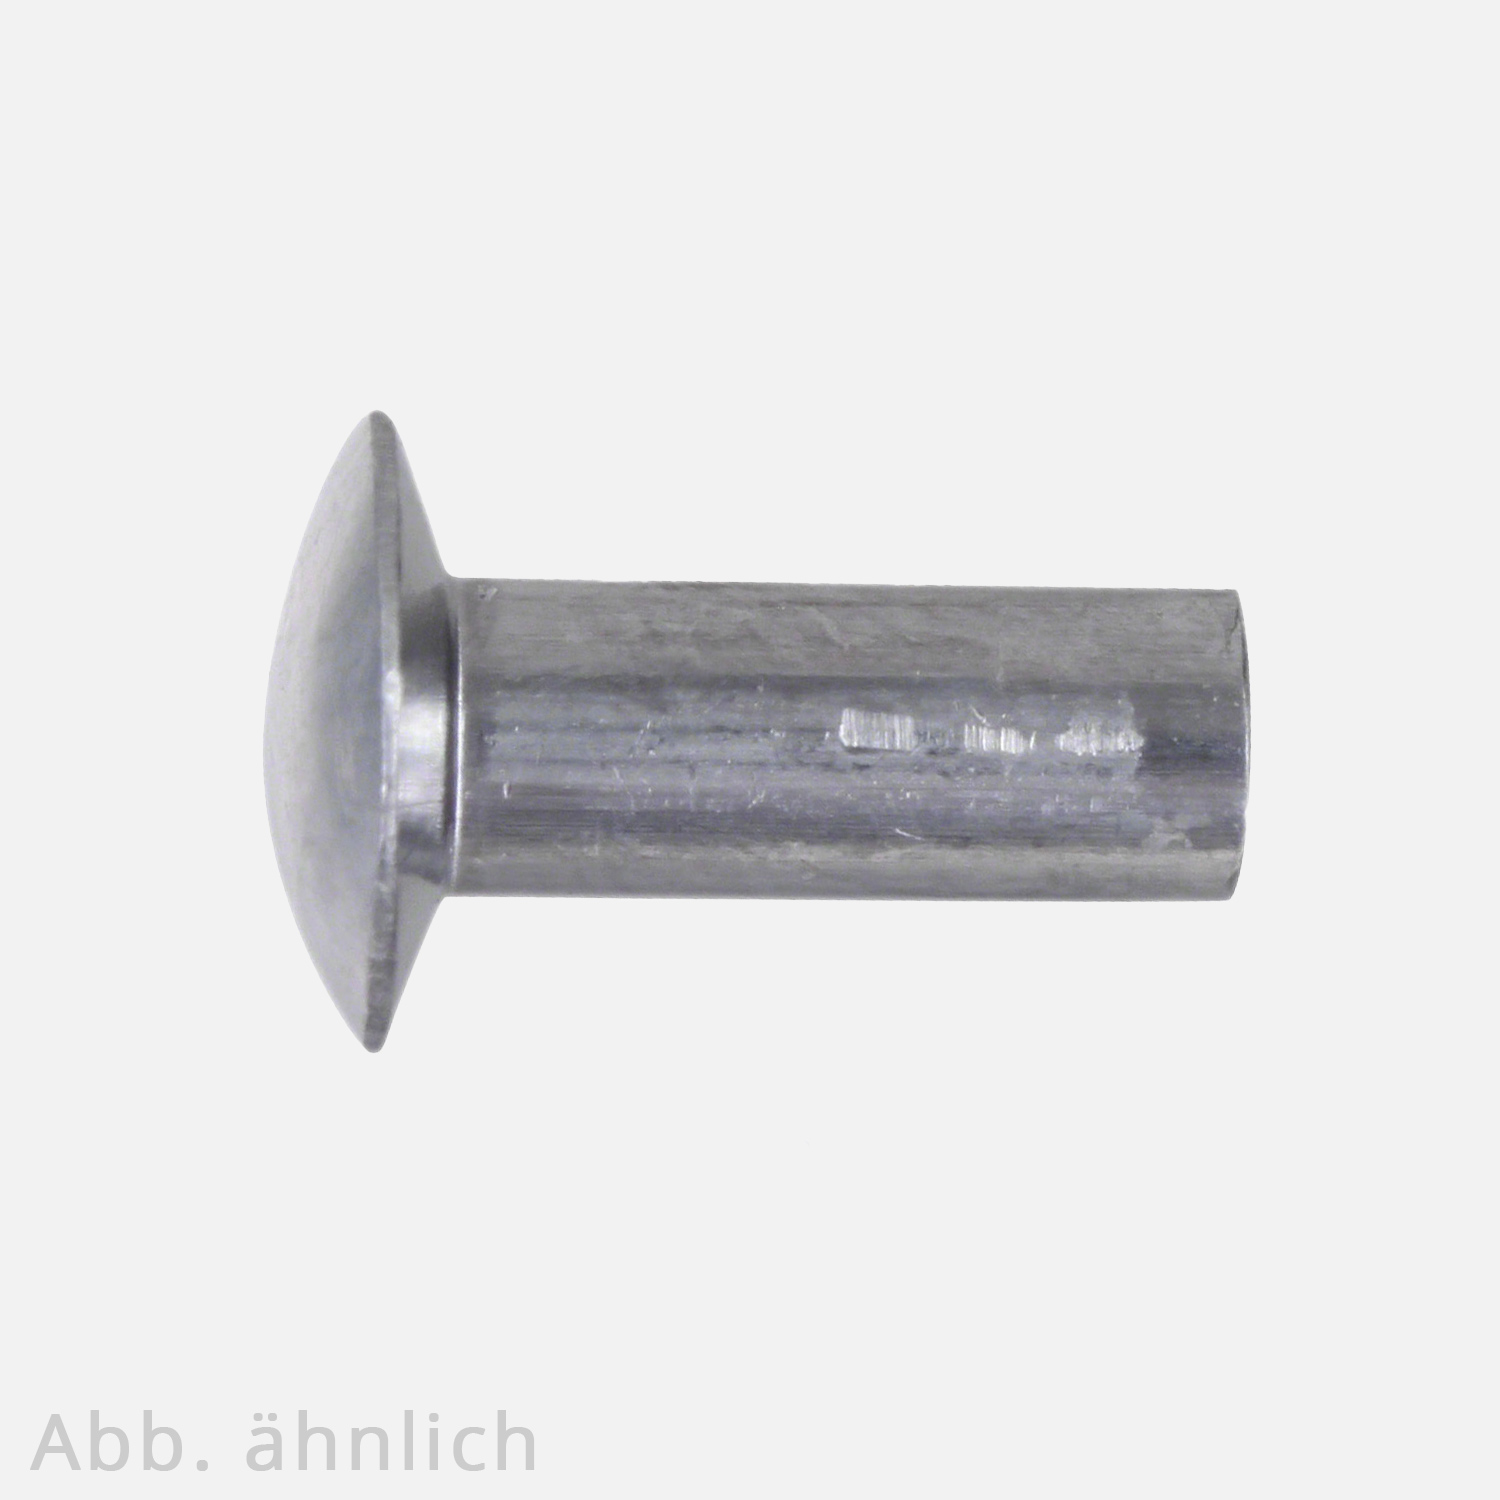 500 Linsennieten 6x16 mm - DIN 662 - Aluminium 99.5